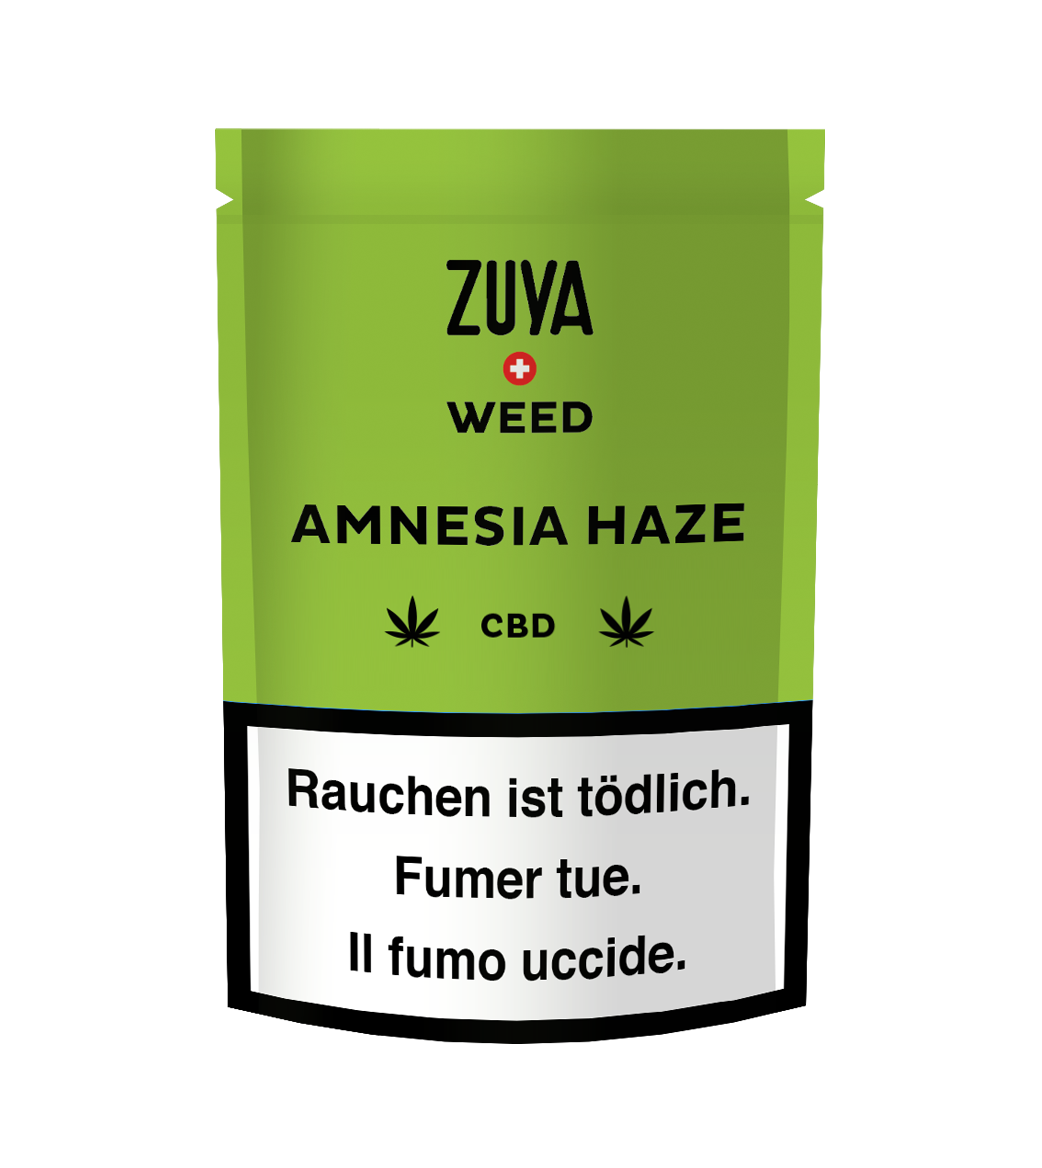 ZUYA Weed AMNESIA HAZE &quot;on the go&quot; - 2g